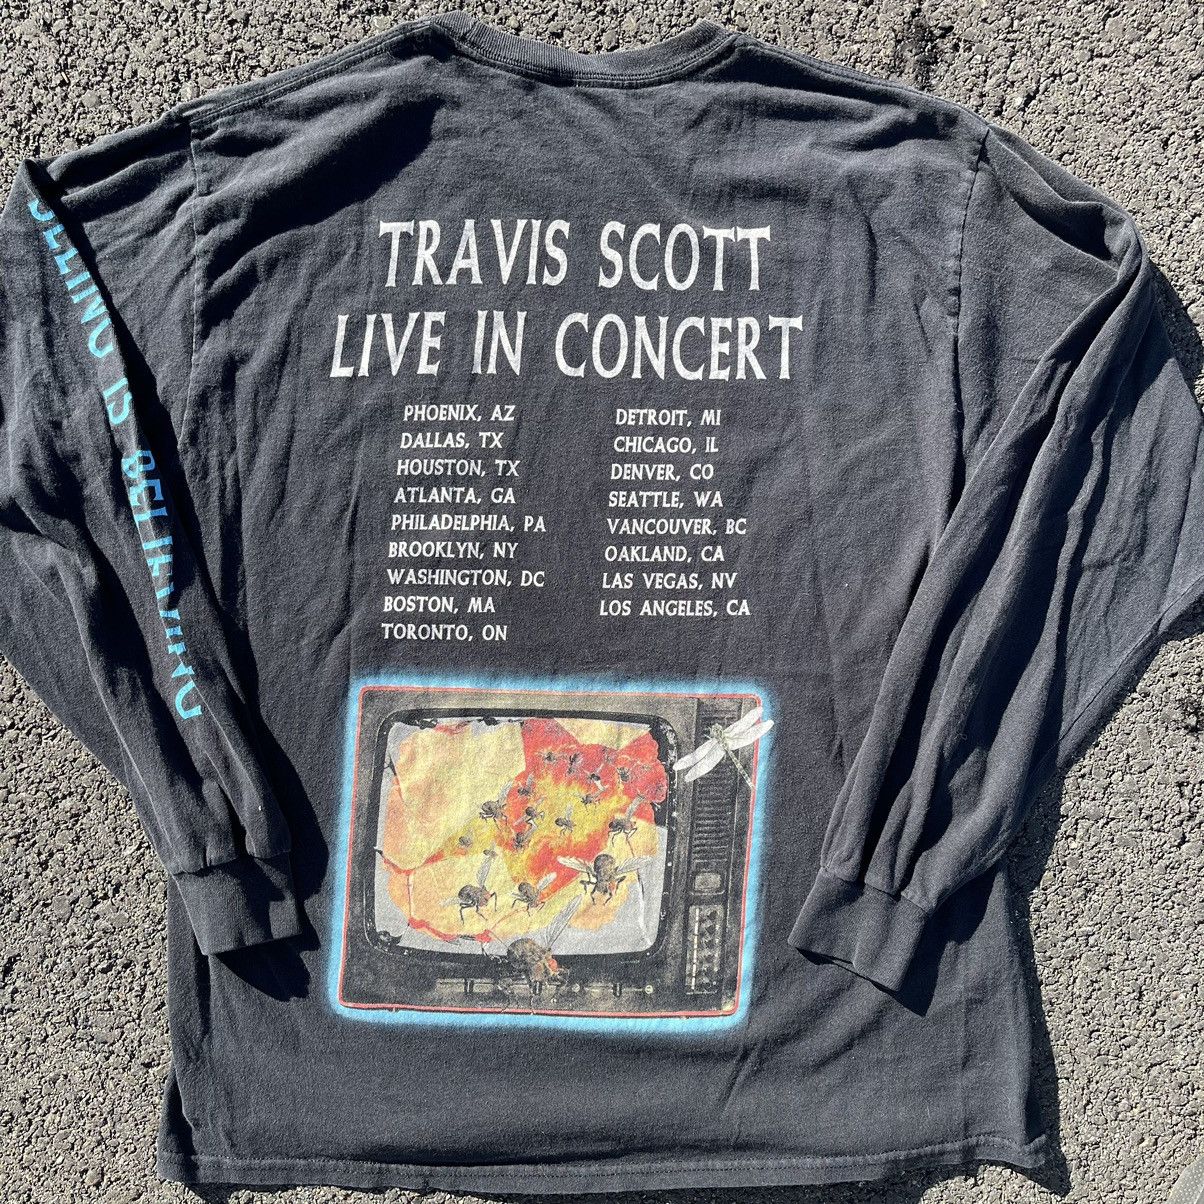 Travis Scott 2017 Travis Scott “Seeing is believing” concert t ...